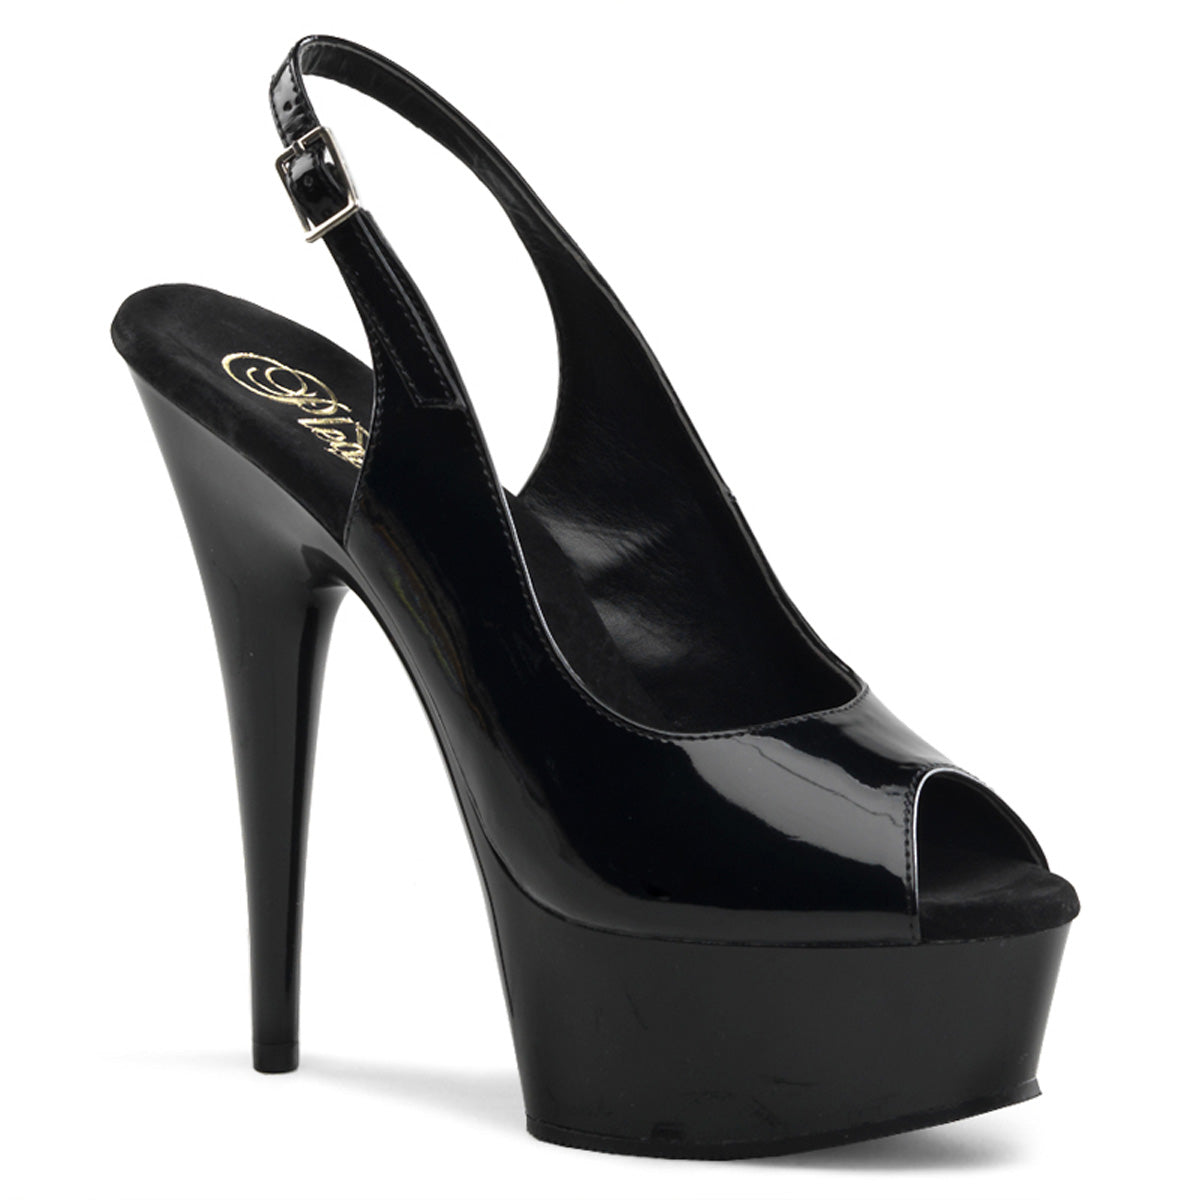 DELIGHT-654 Pleaser 6 Inch Heel Black Pole Dancing Platforms-Pleaser- Sexy Shoes